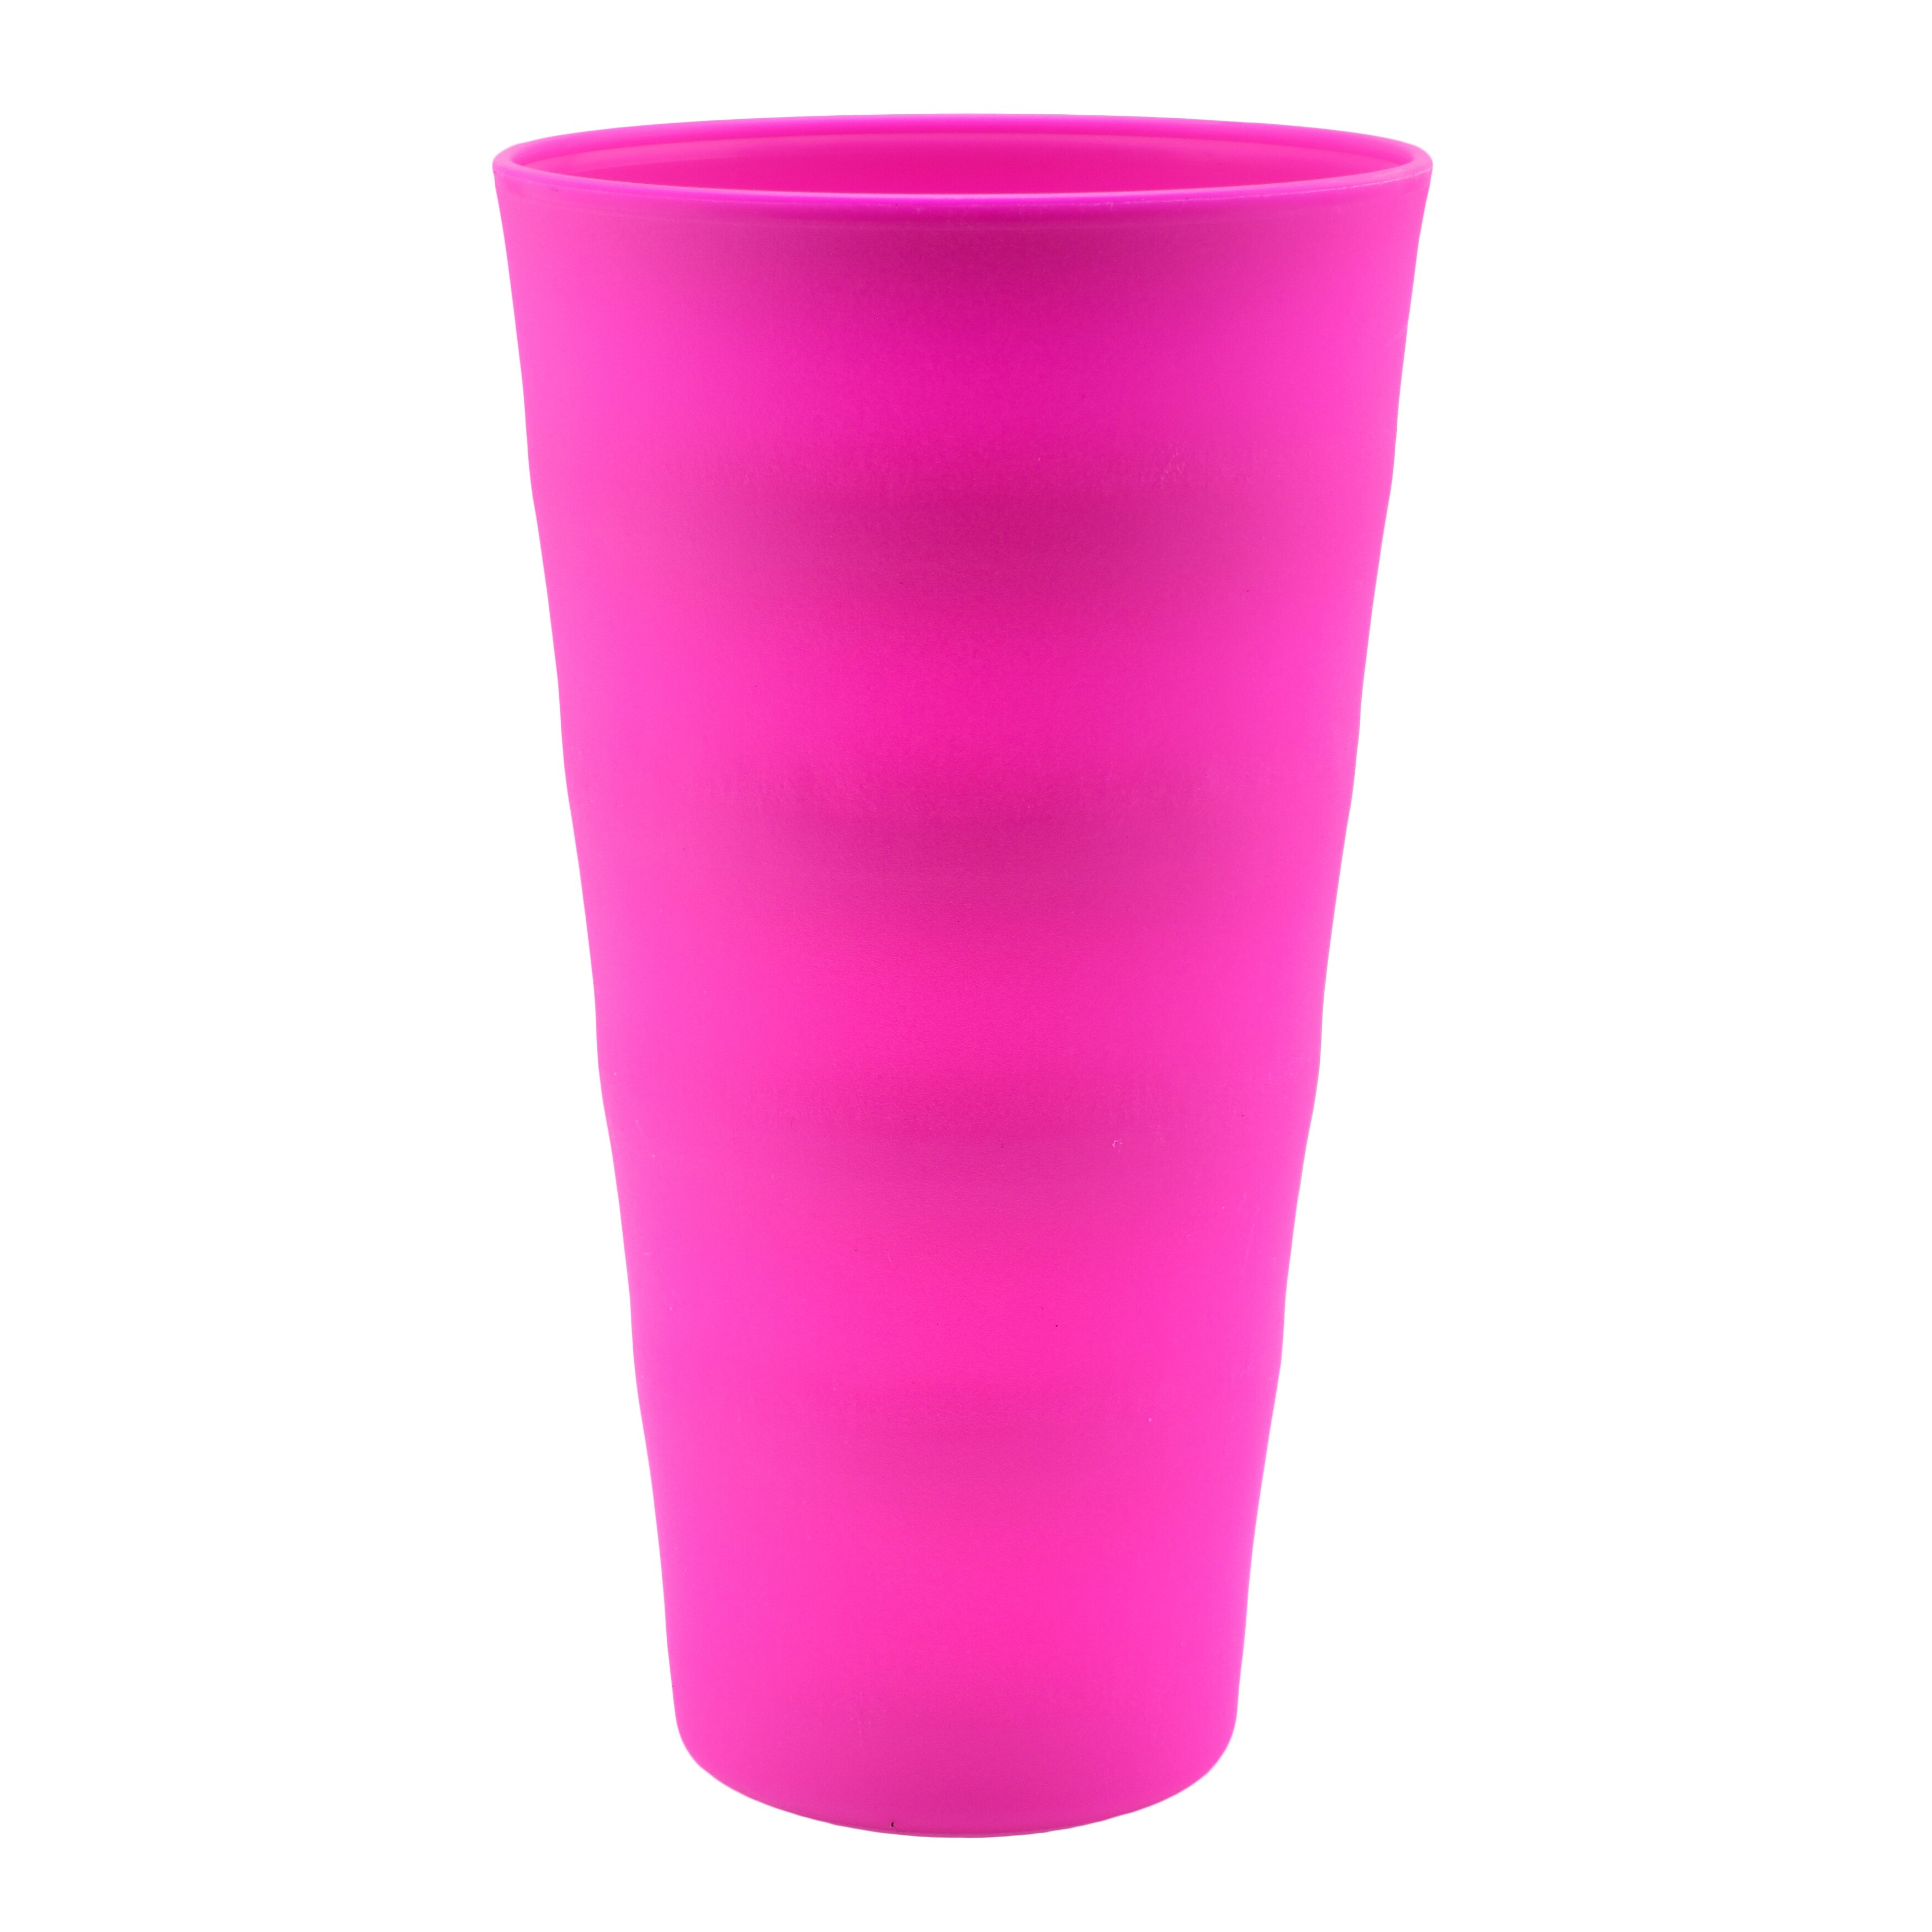 https://ak1.ostkcdn.com/images/products/is/images/direct/ff9c702c44b57b208fd7b6cbfae587fff00430c4/Break-Resistant-Plastic-Cups-20oz%2C-Reusable-Design.jpg